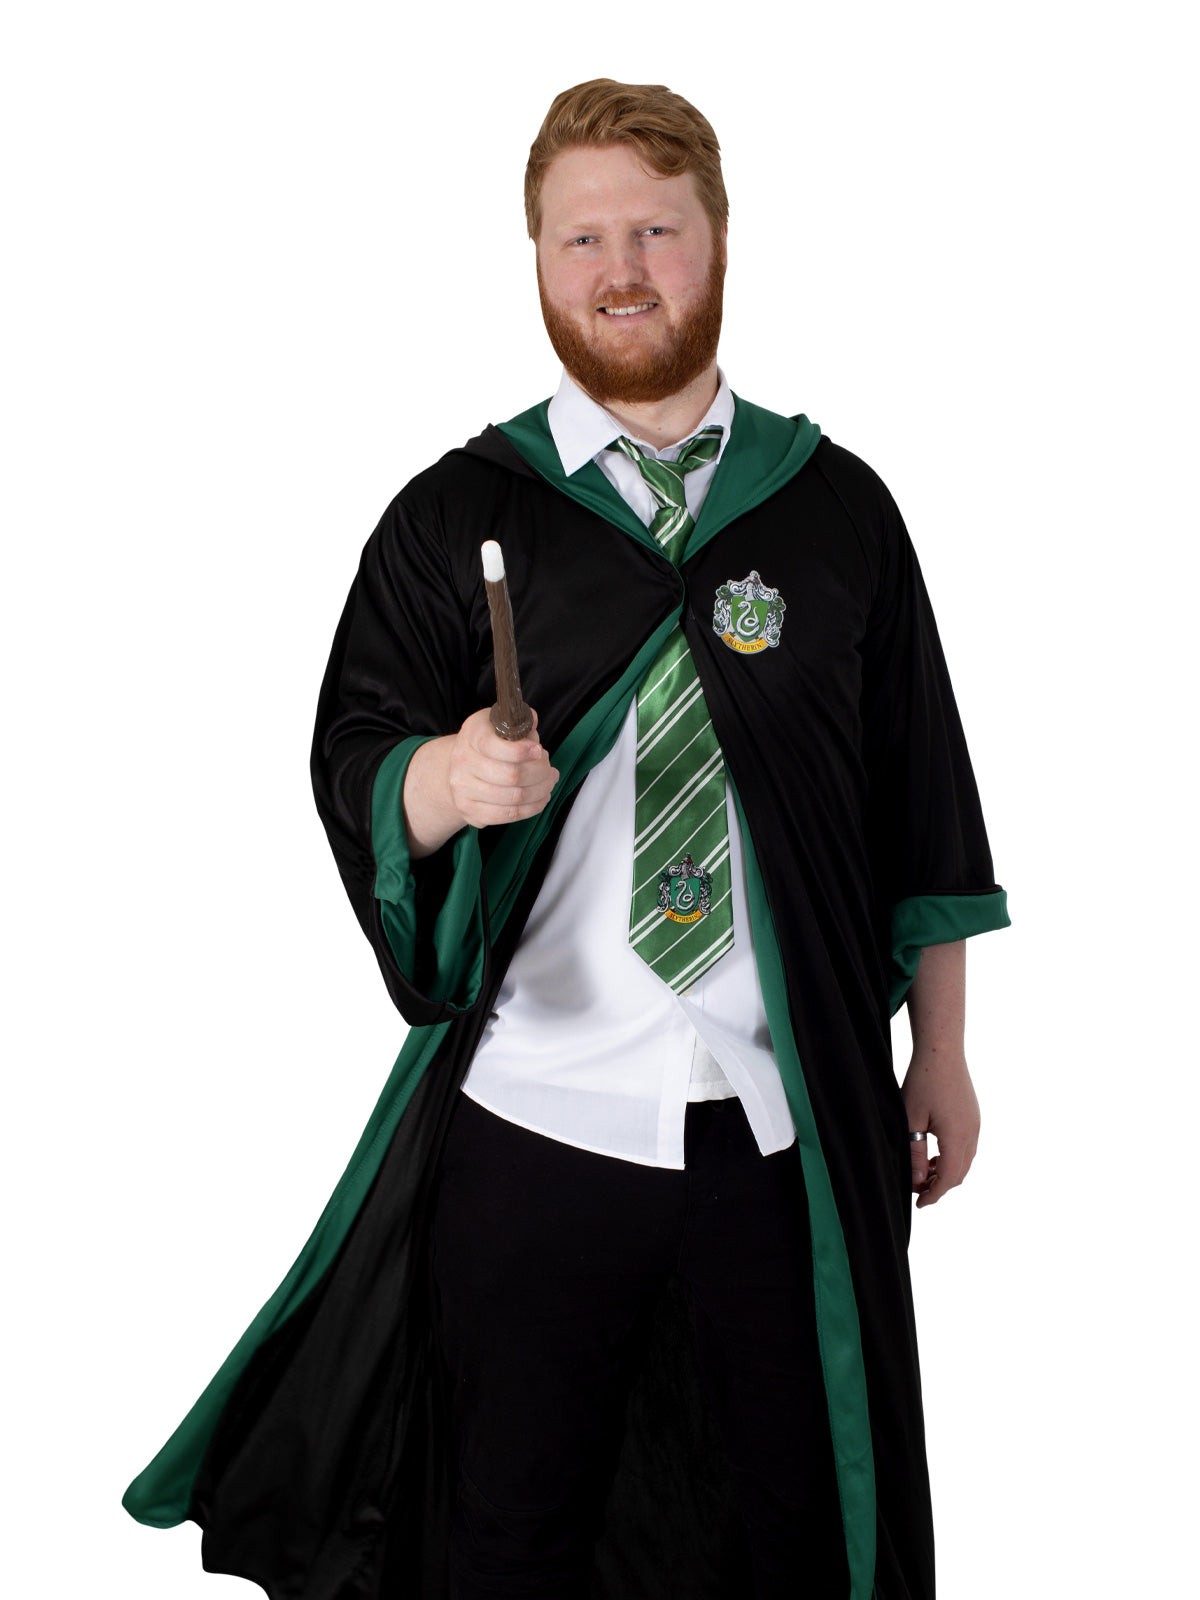 Harry Potter Slytherin Adult Costume Robe - Licensed